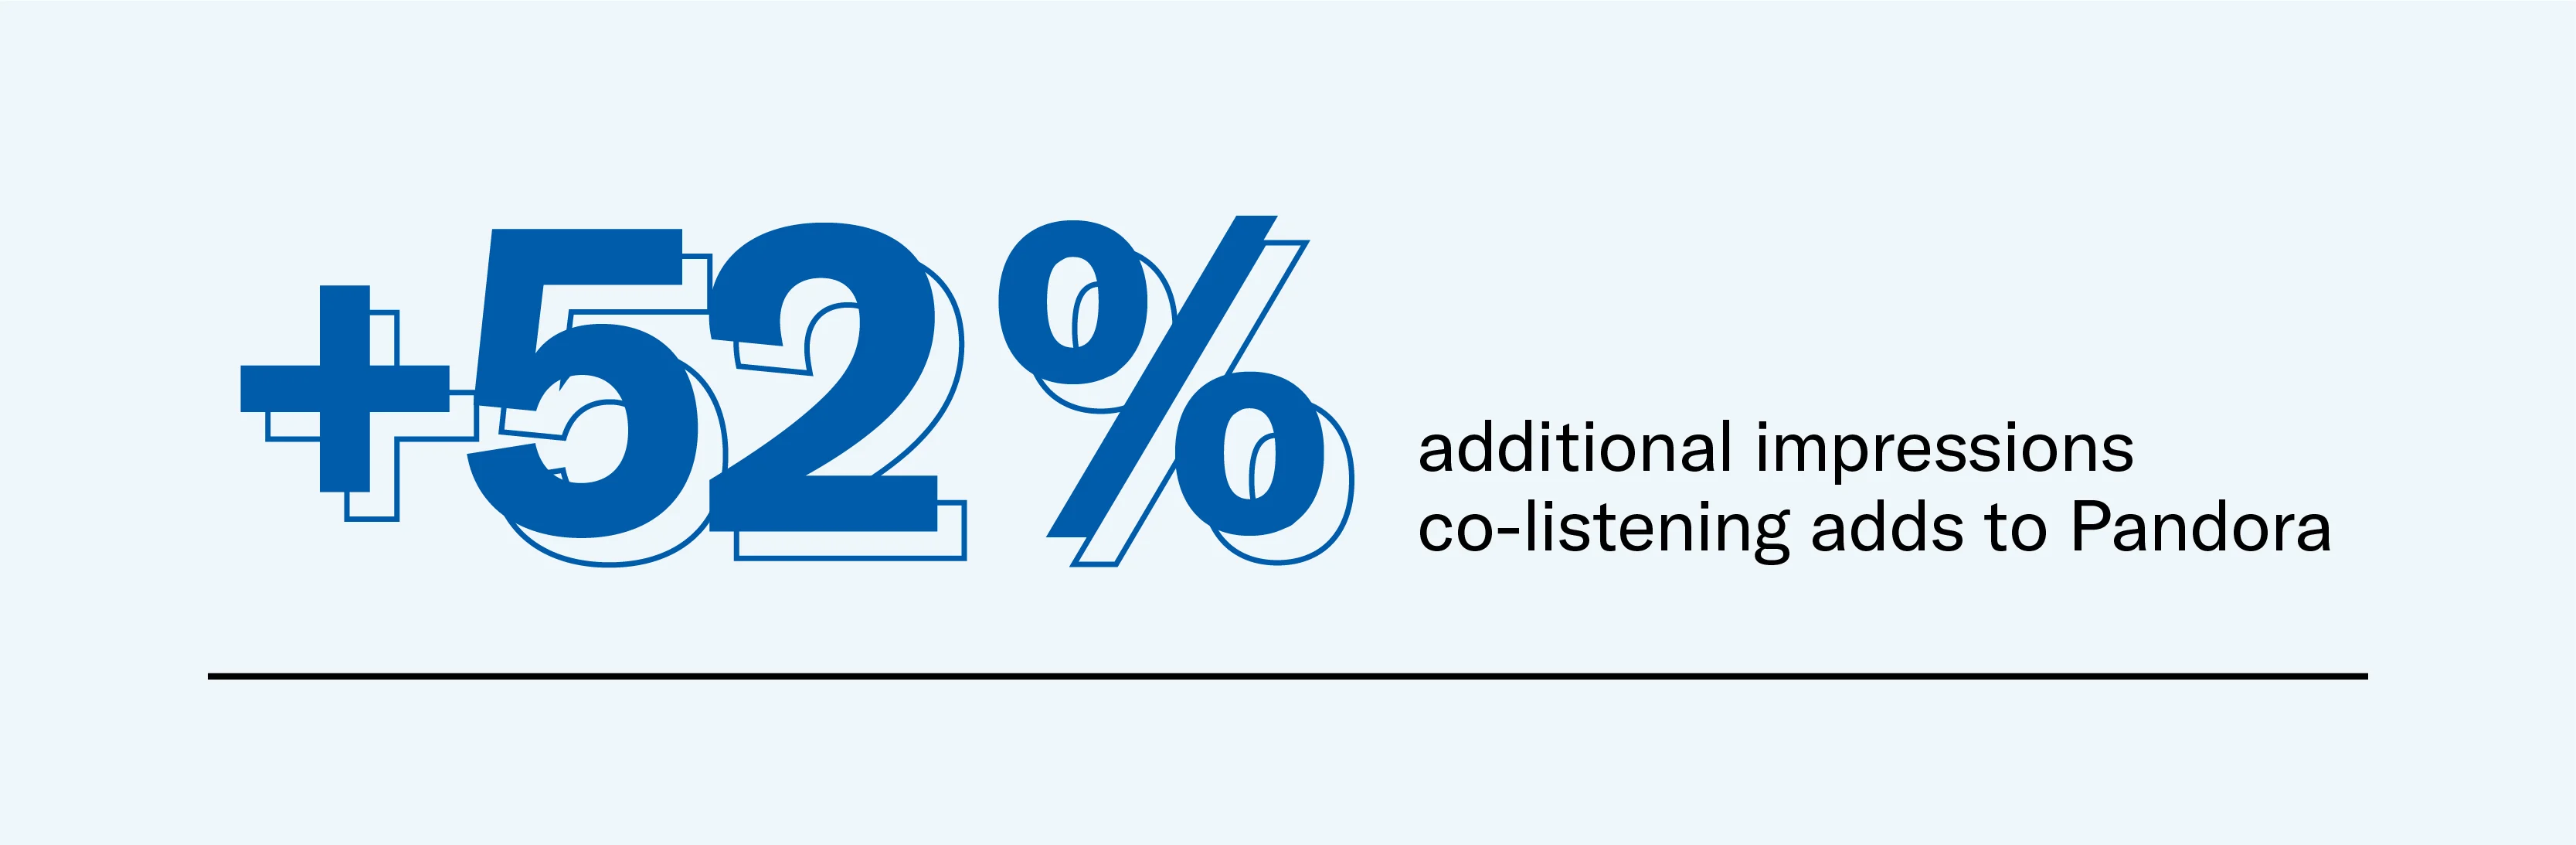 +52% co-listening impressions with Pandora